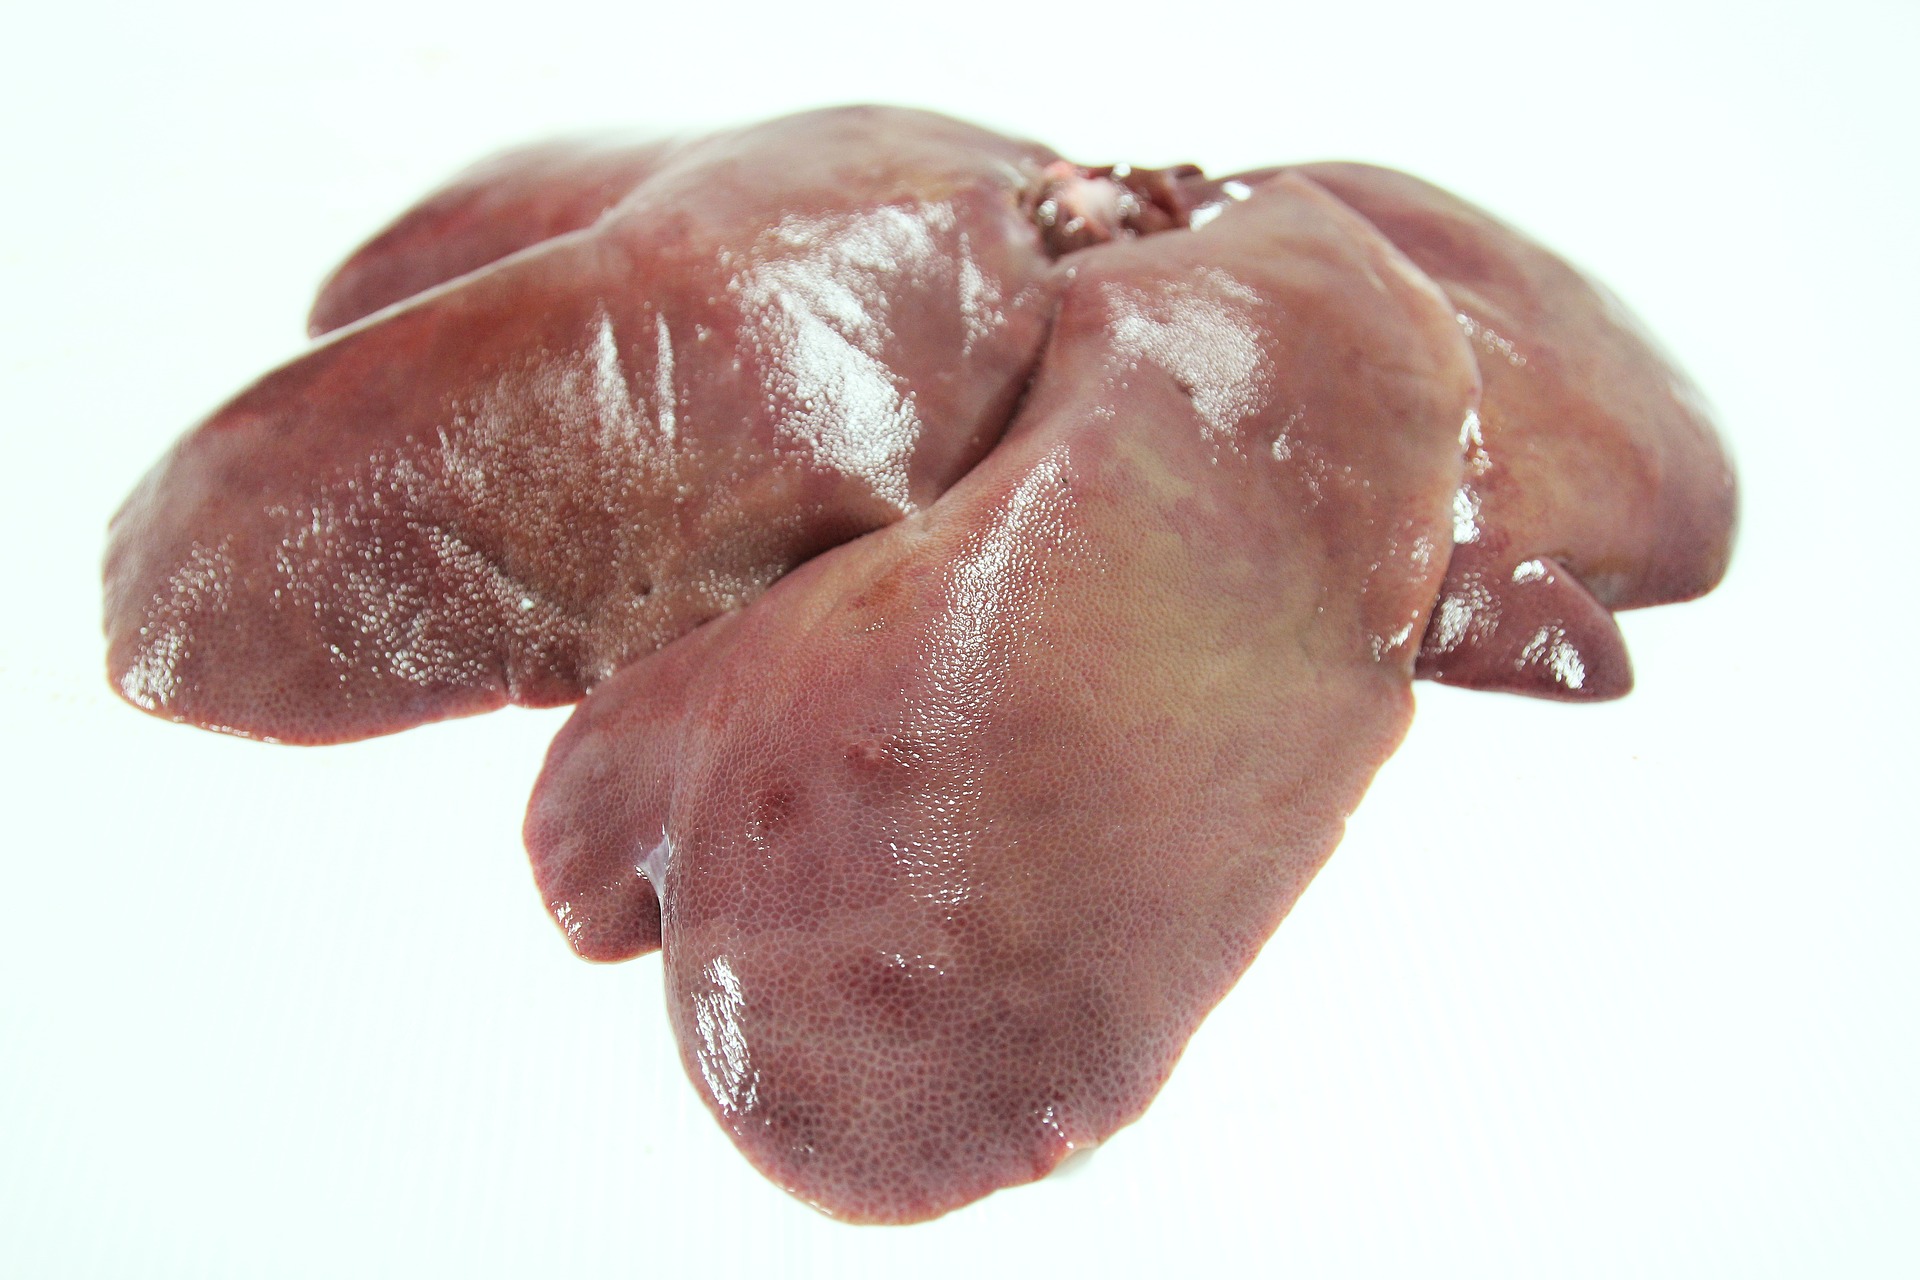 File photo of raw pork liver. Photo: Chadarat Sangnin